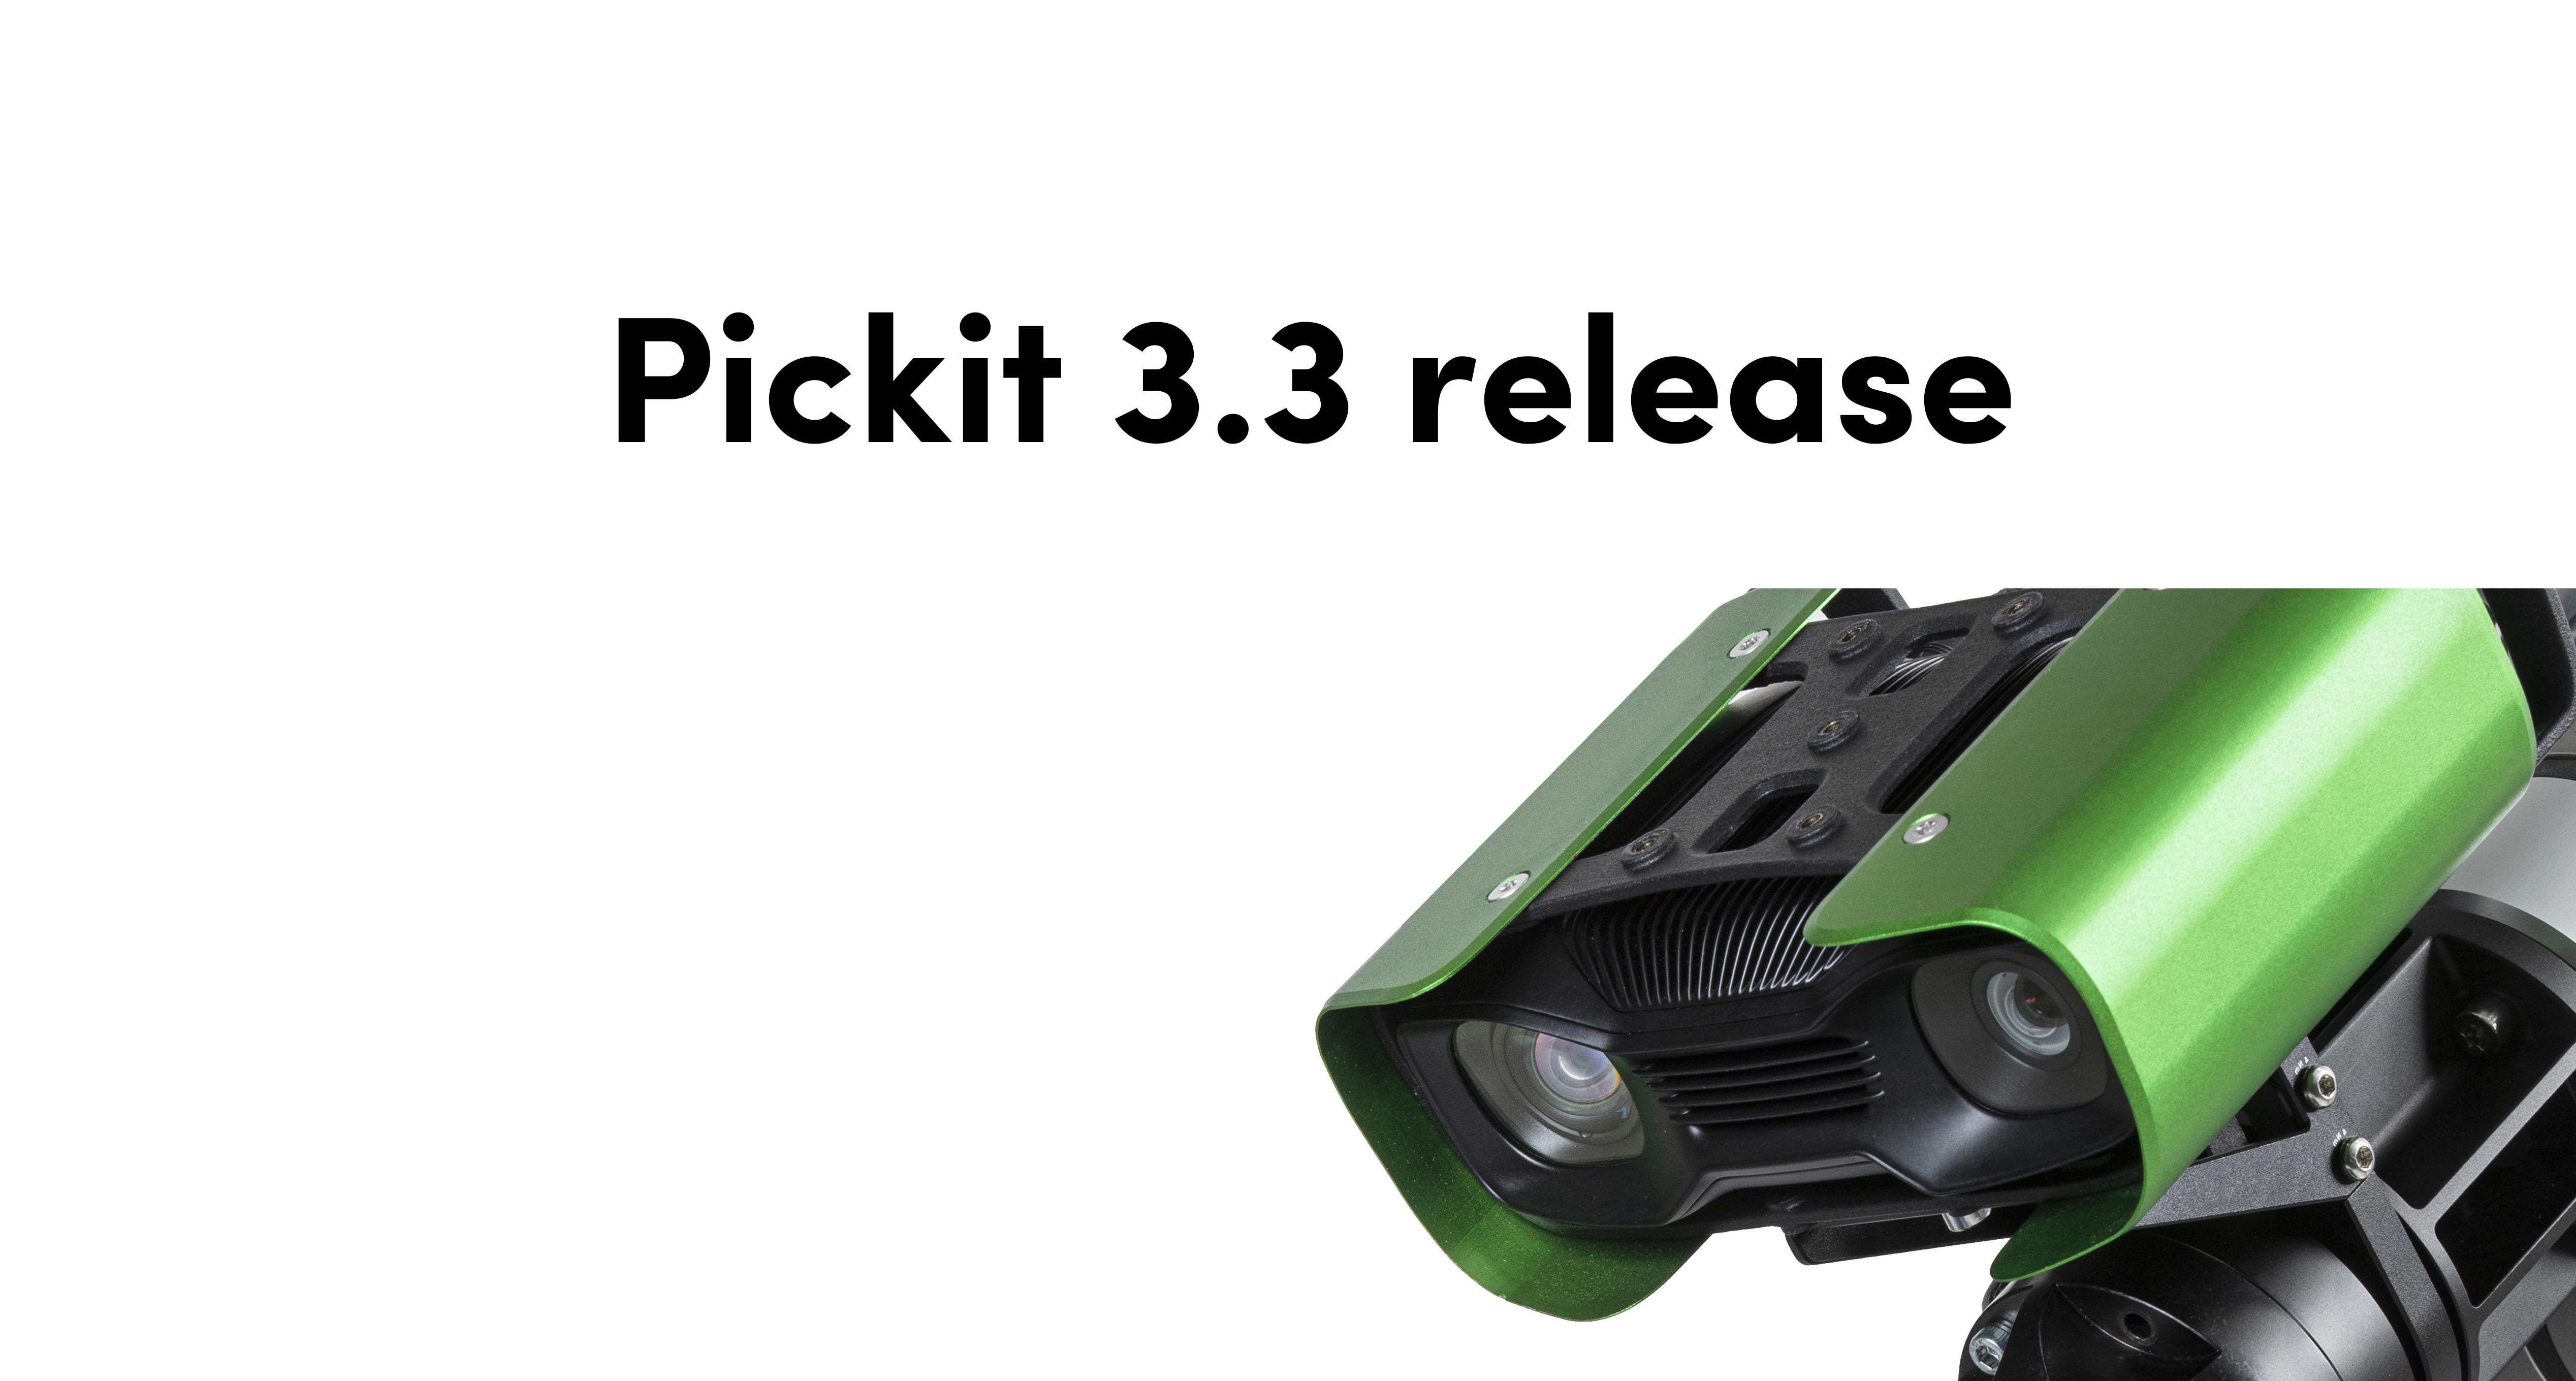 Pickit 3.3: Adding New Robot Guidance Capabilities